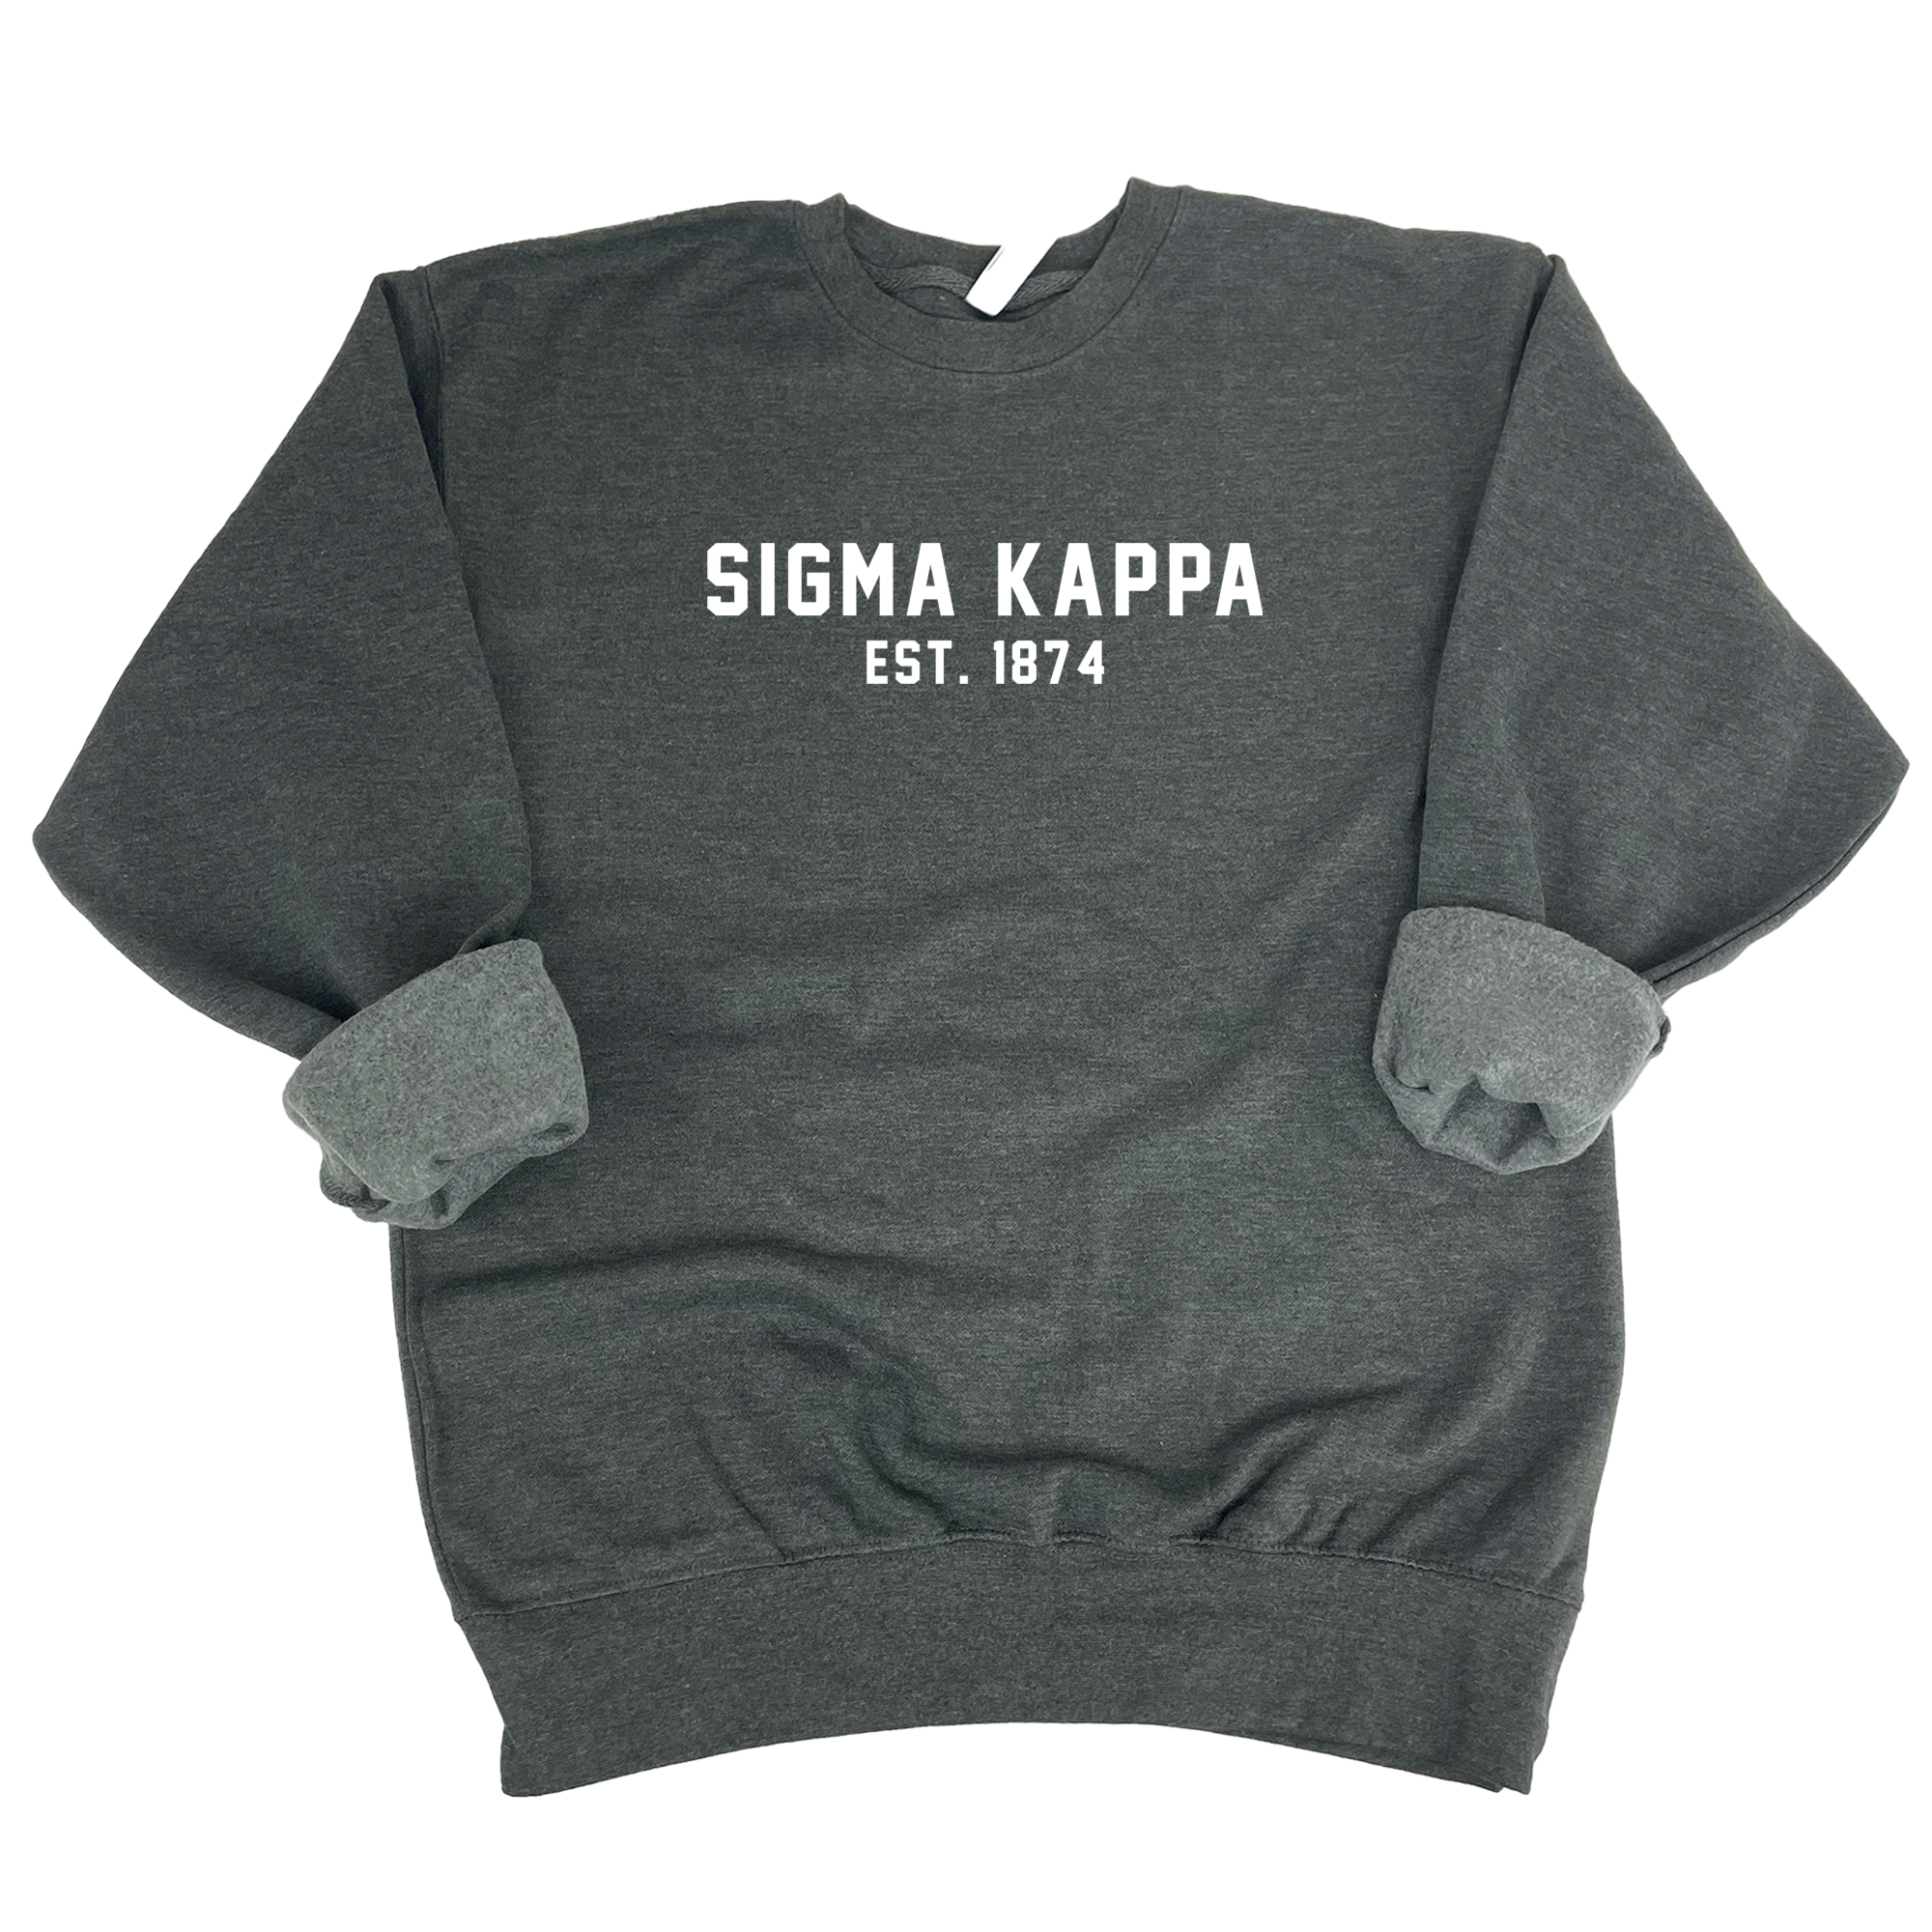 Kappa Sigma Greek Go – 1874 Sweatshirt Est. Chic